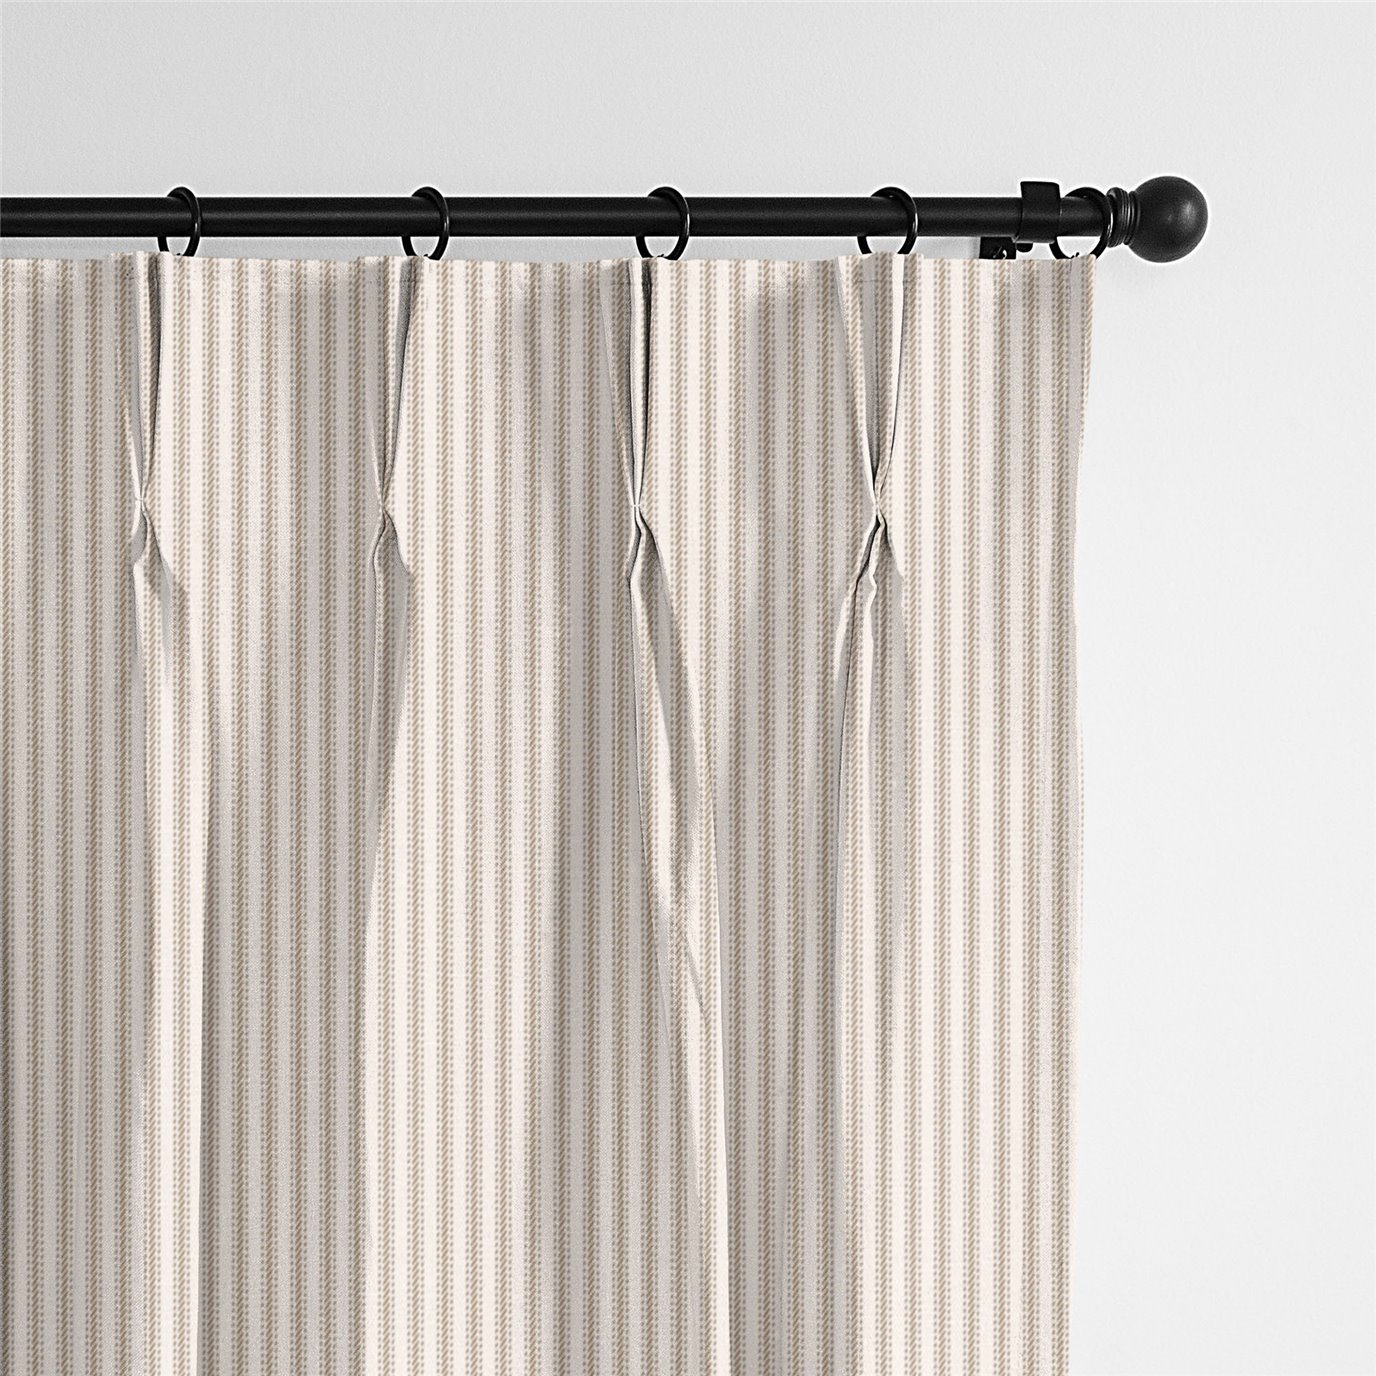 Cruz Ticking Stripes Taupe/Ivory Pinch Pleat Drapery Panel - Pair - Size 40"x84"